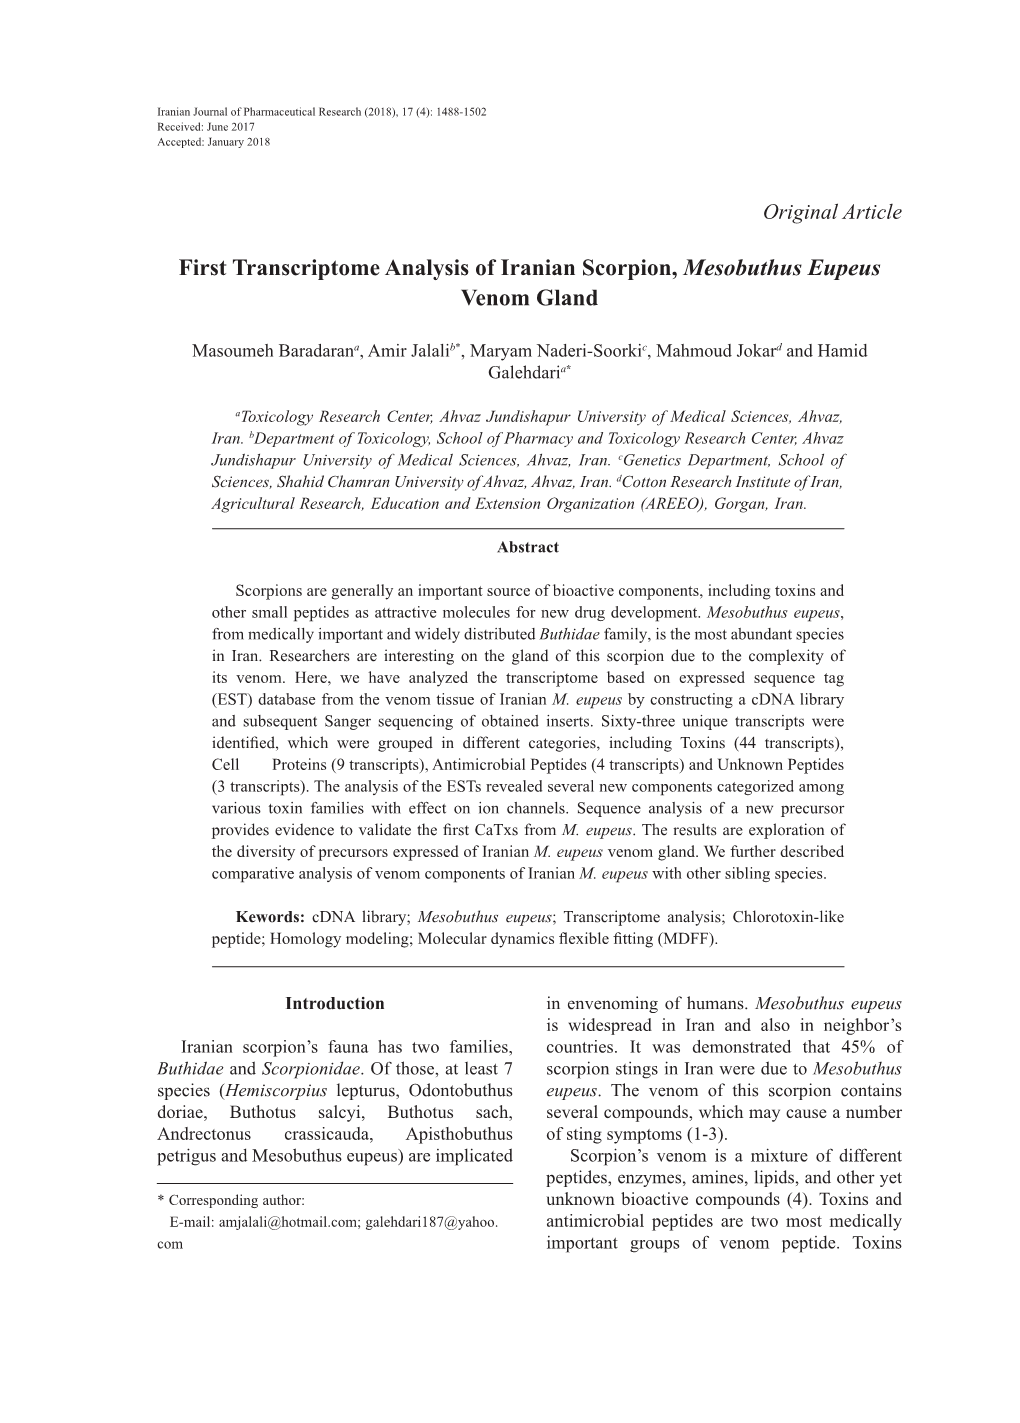 First Transcriptome Analysis of Iranian Scorpion, Mesobuthus Eupeus Venom Gland